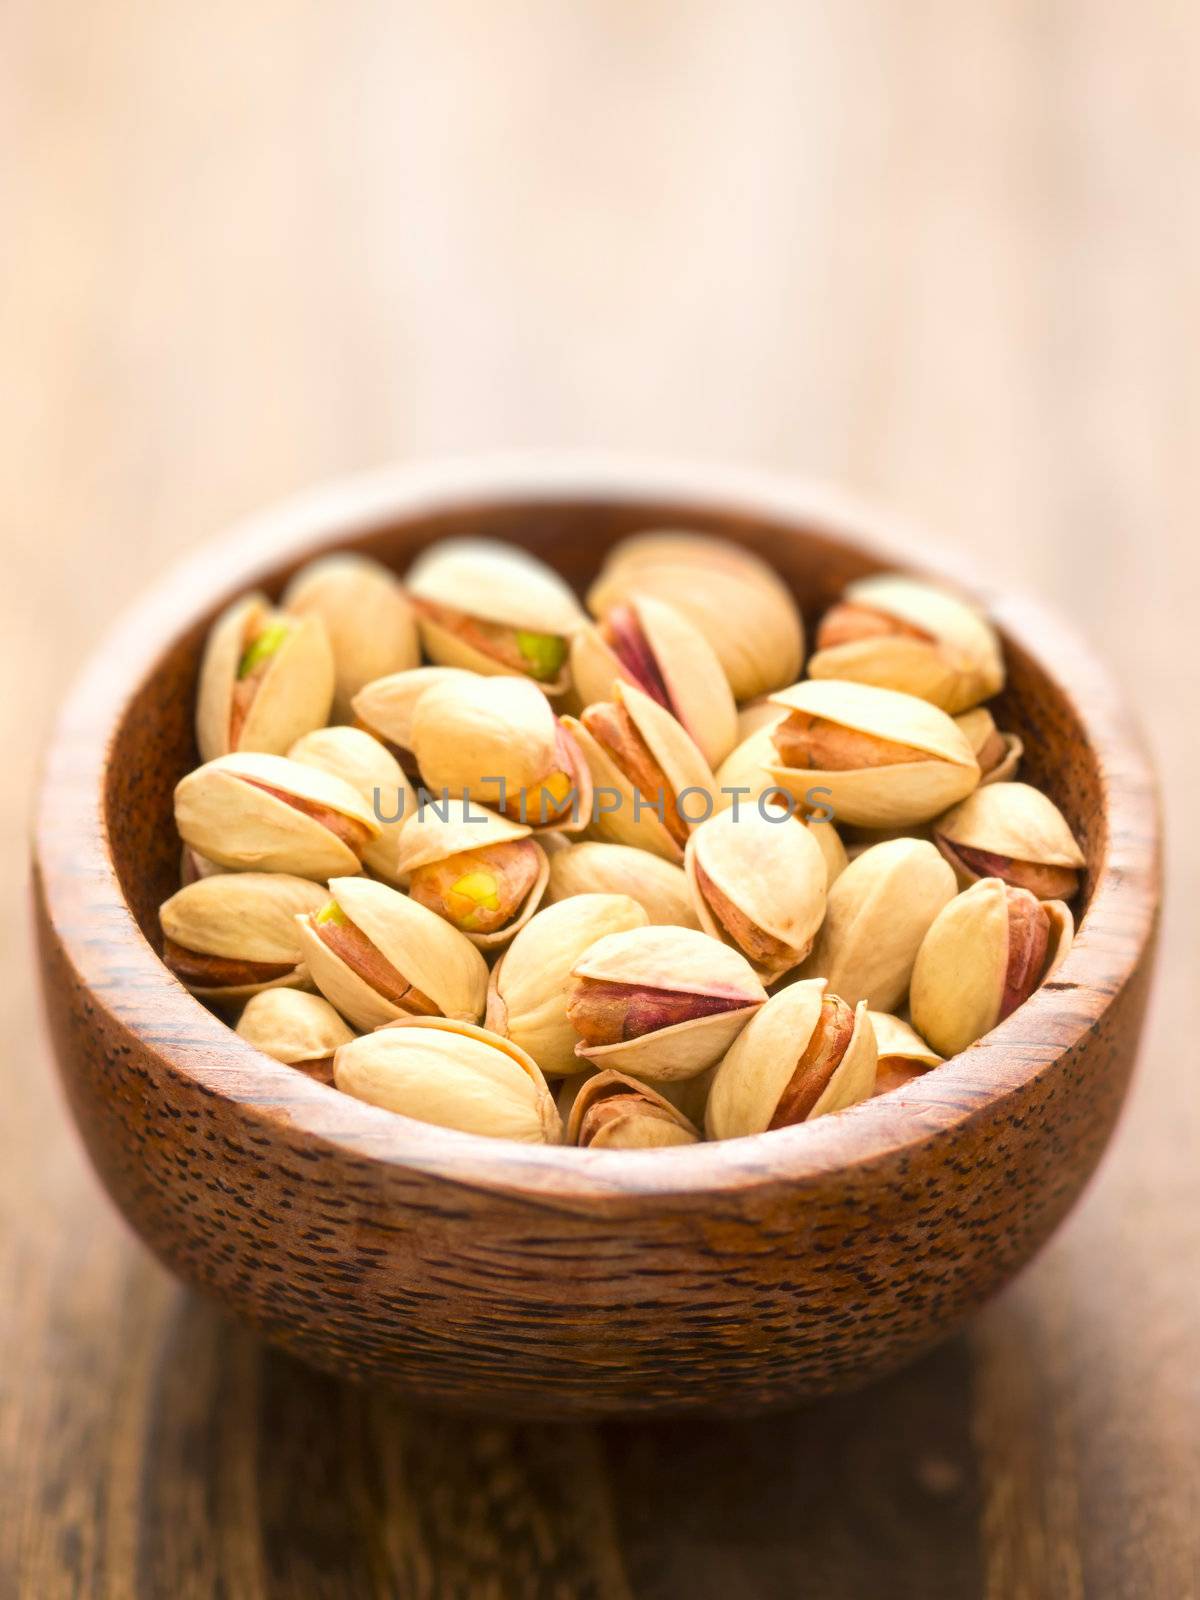 pistachio nuts by zkruger